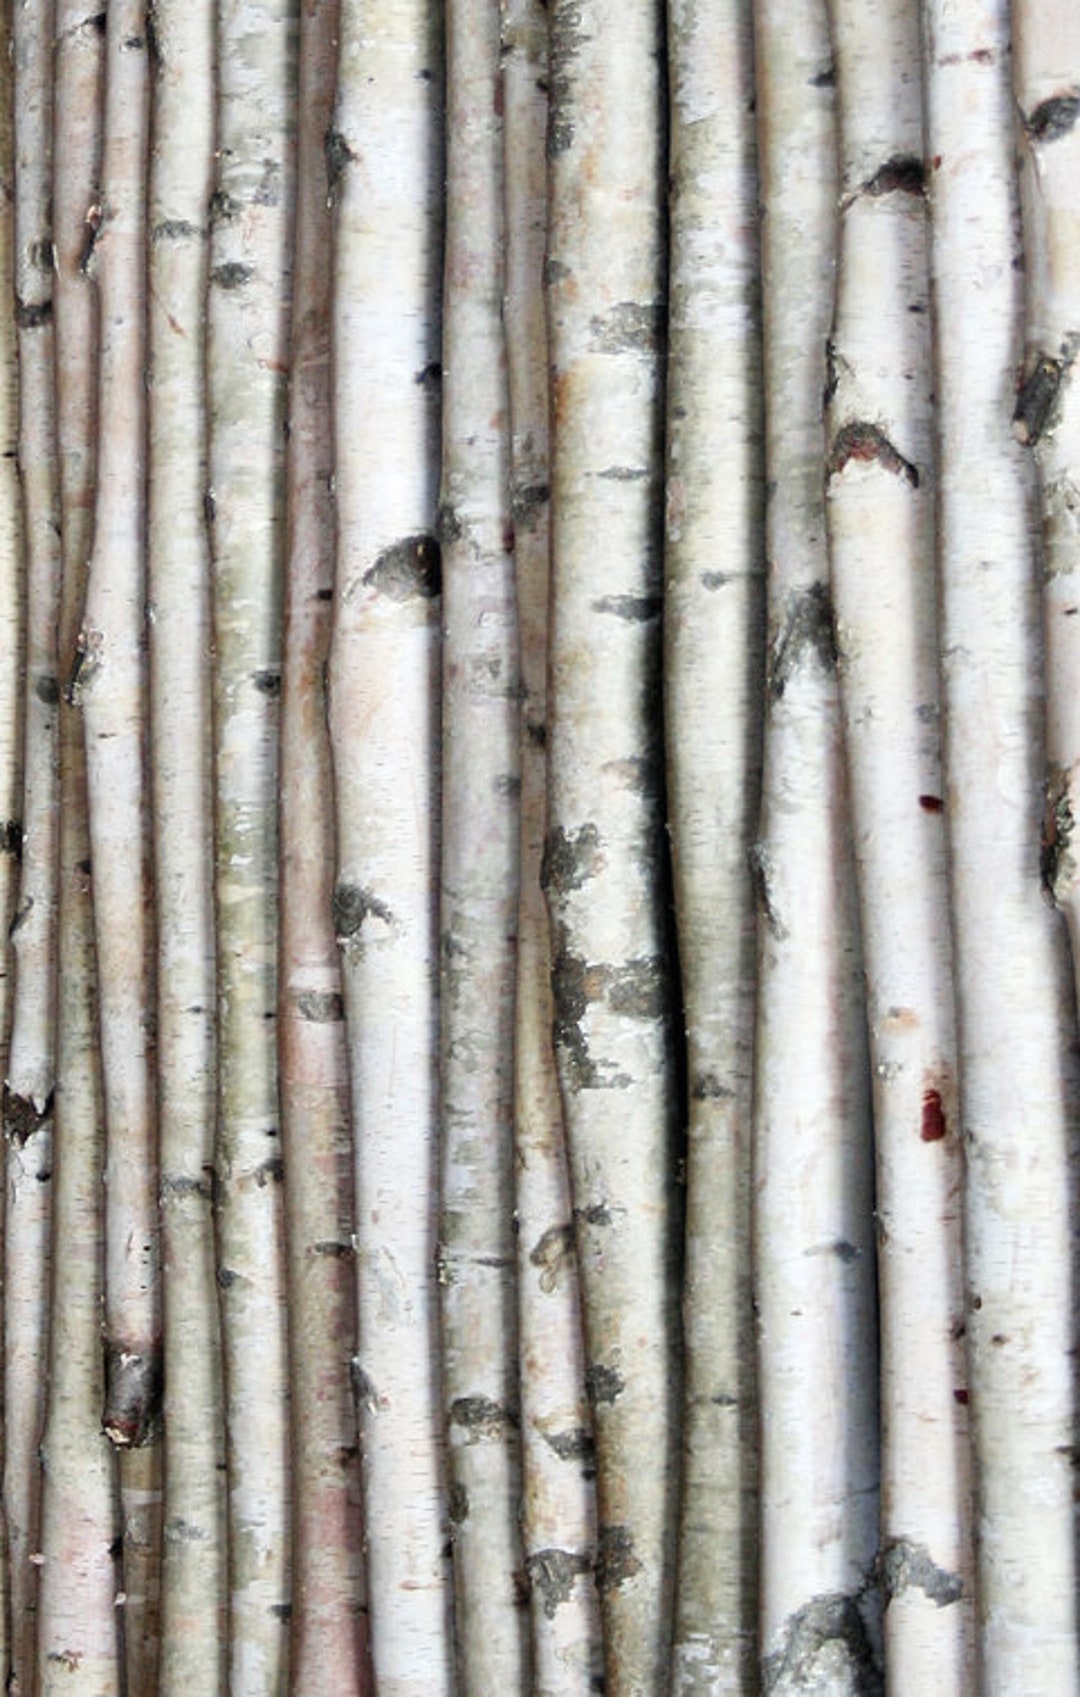 Wilson Decorative White Birch Log Bundle, Natural Bark Wood Home Décor set  of 8 